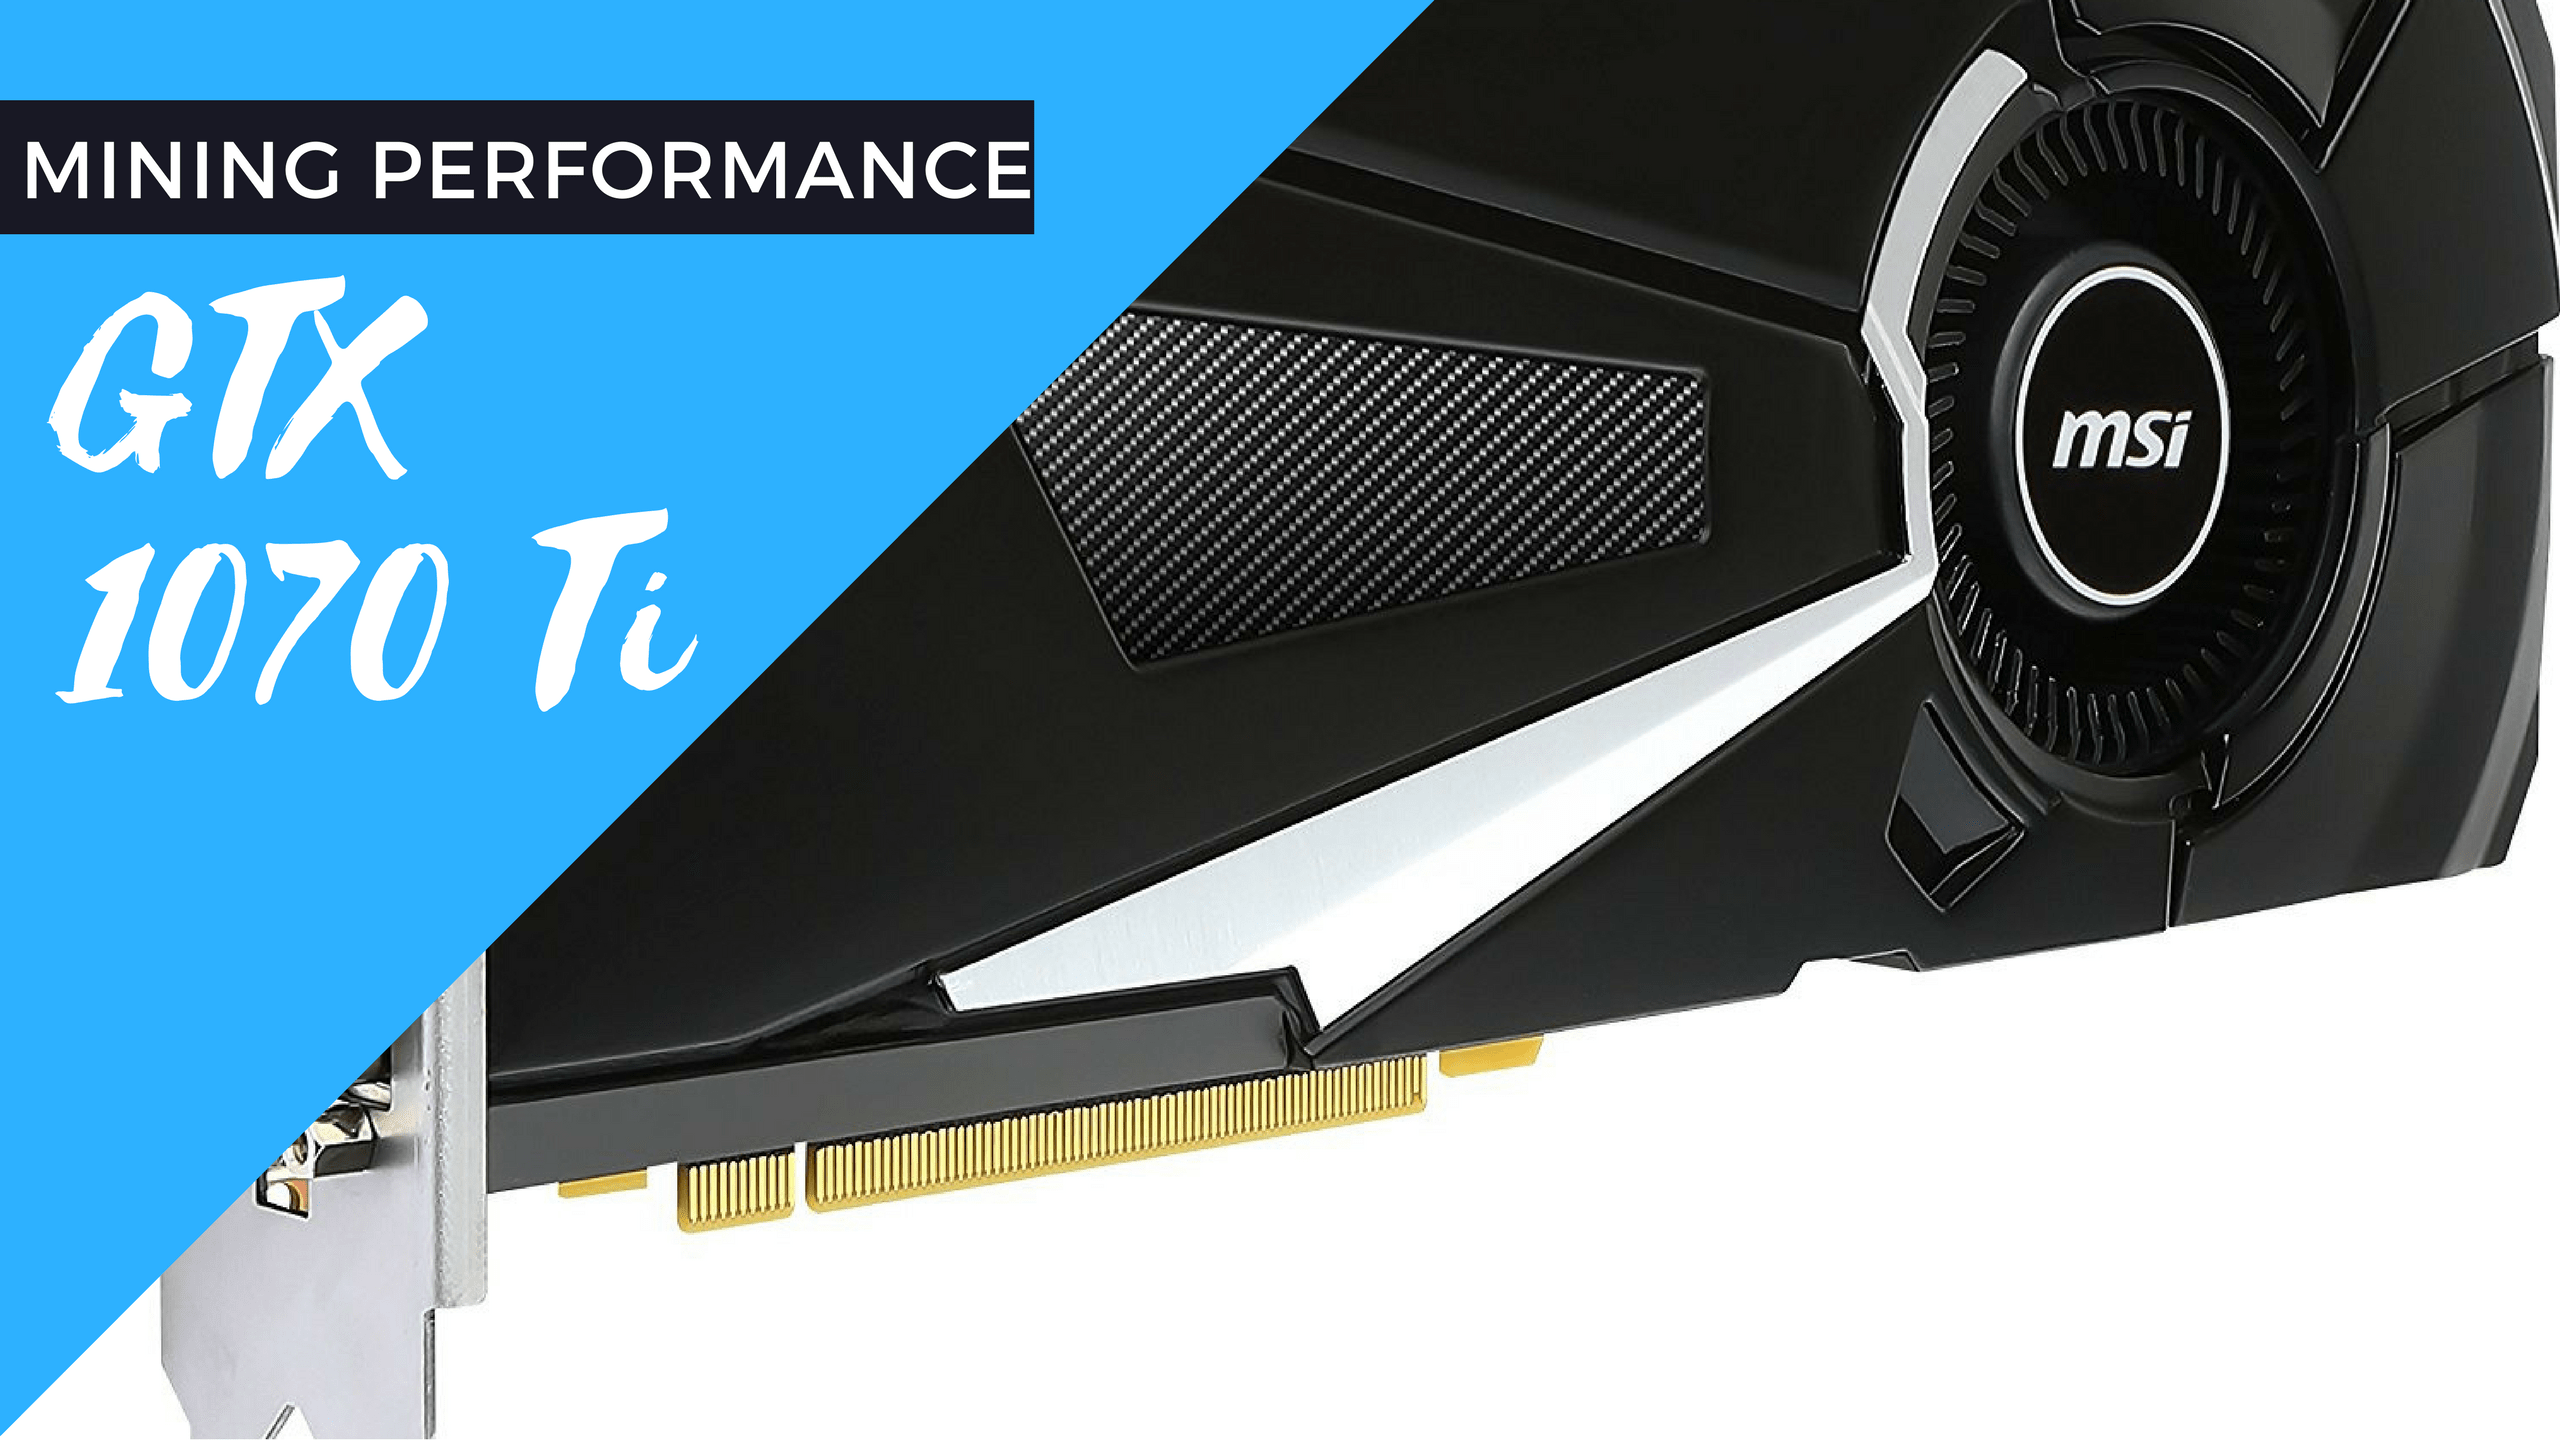 Nvidia GeForce GTX 1070 Ti – Review & Mining Performance